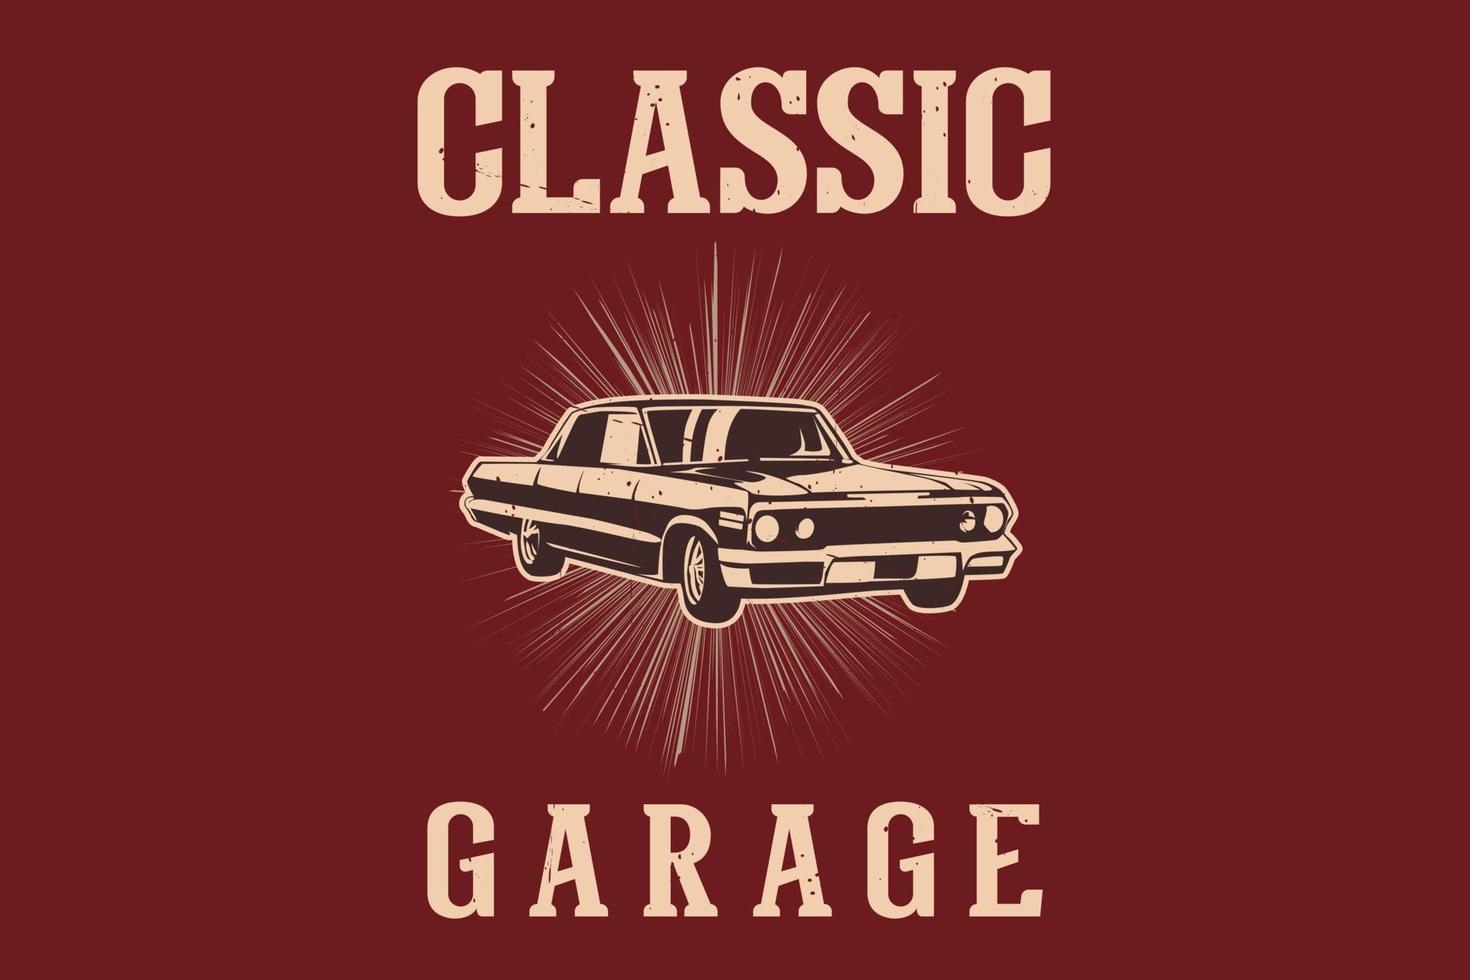 Classic garage vintage car silhouette design vector